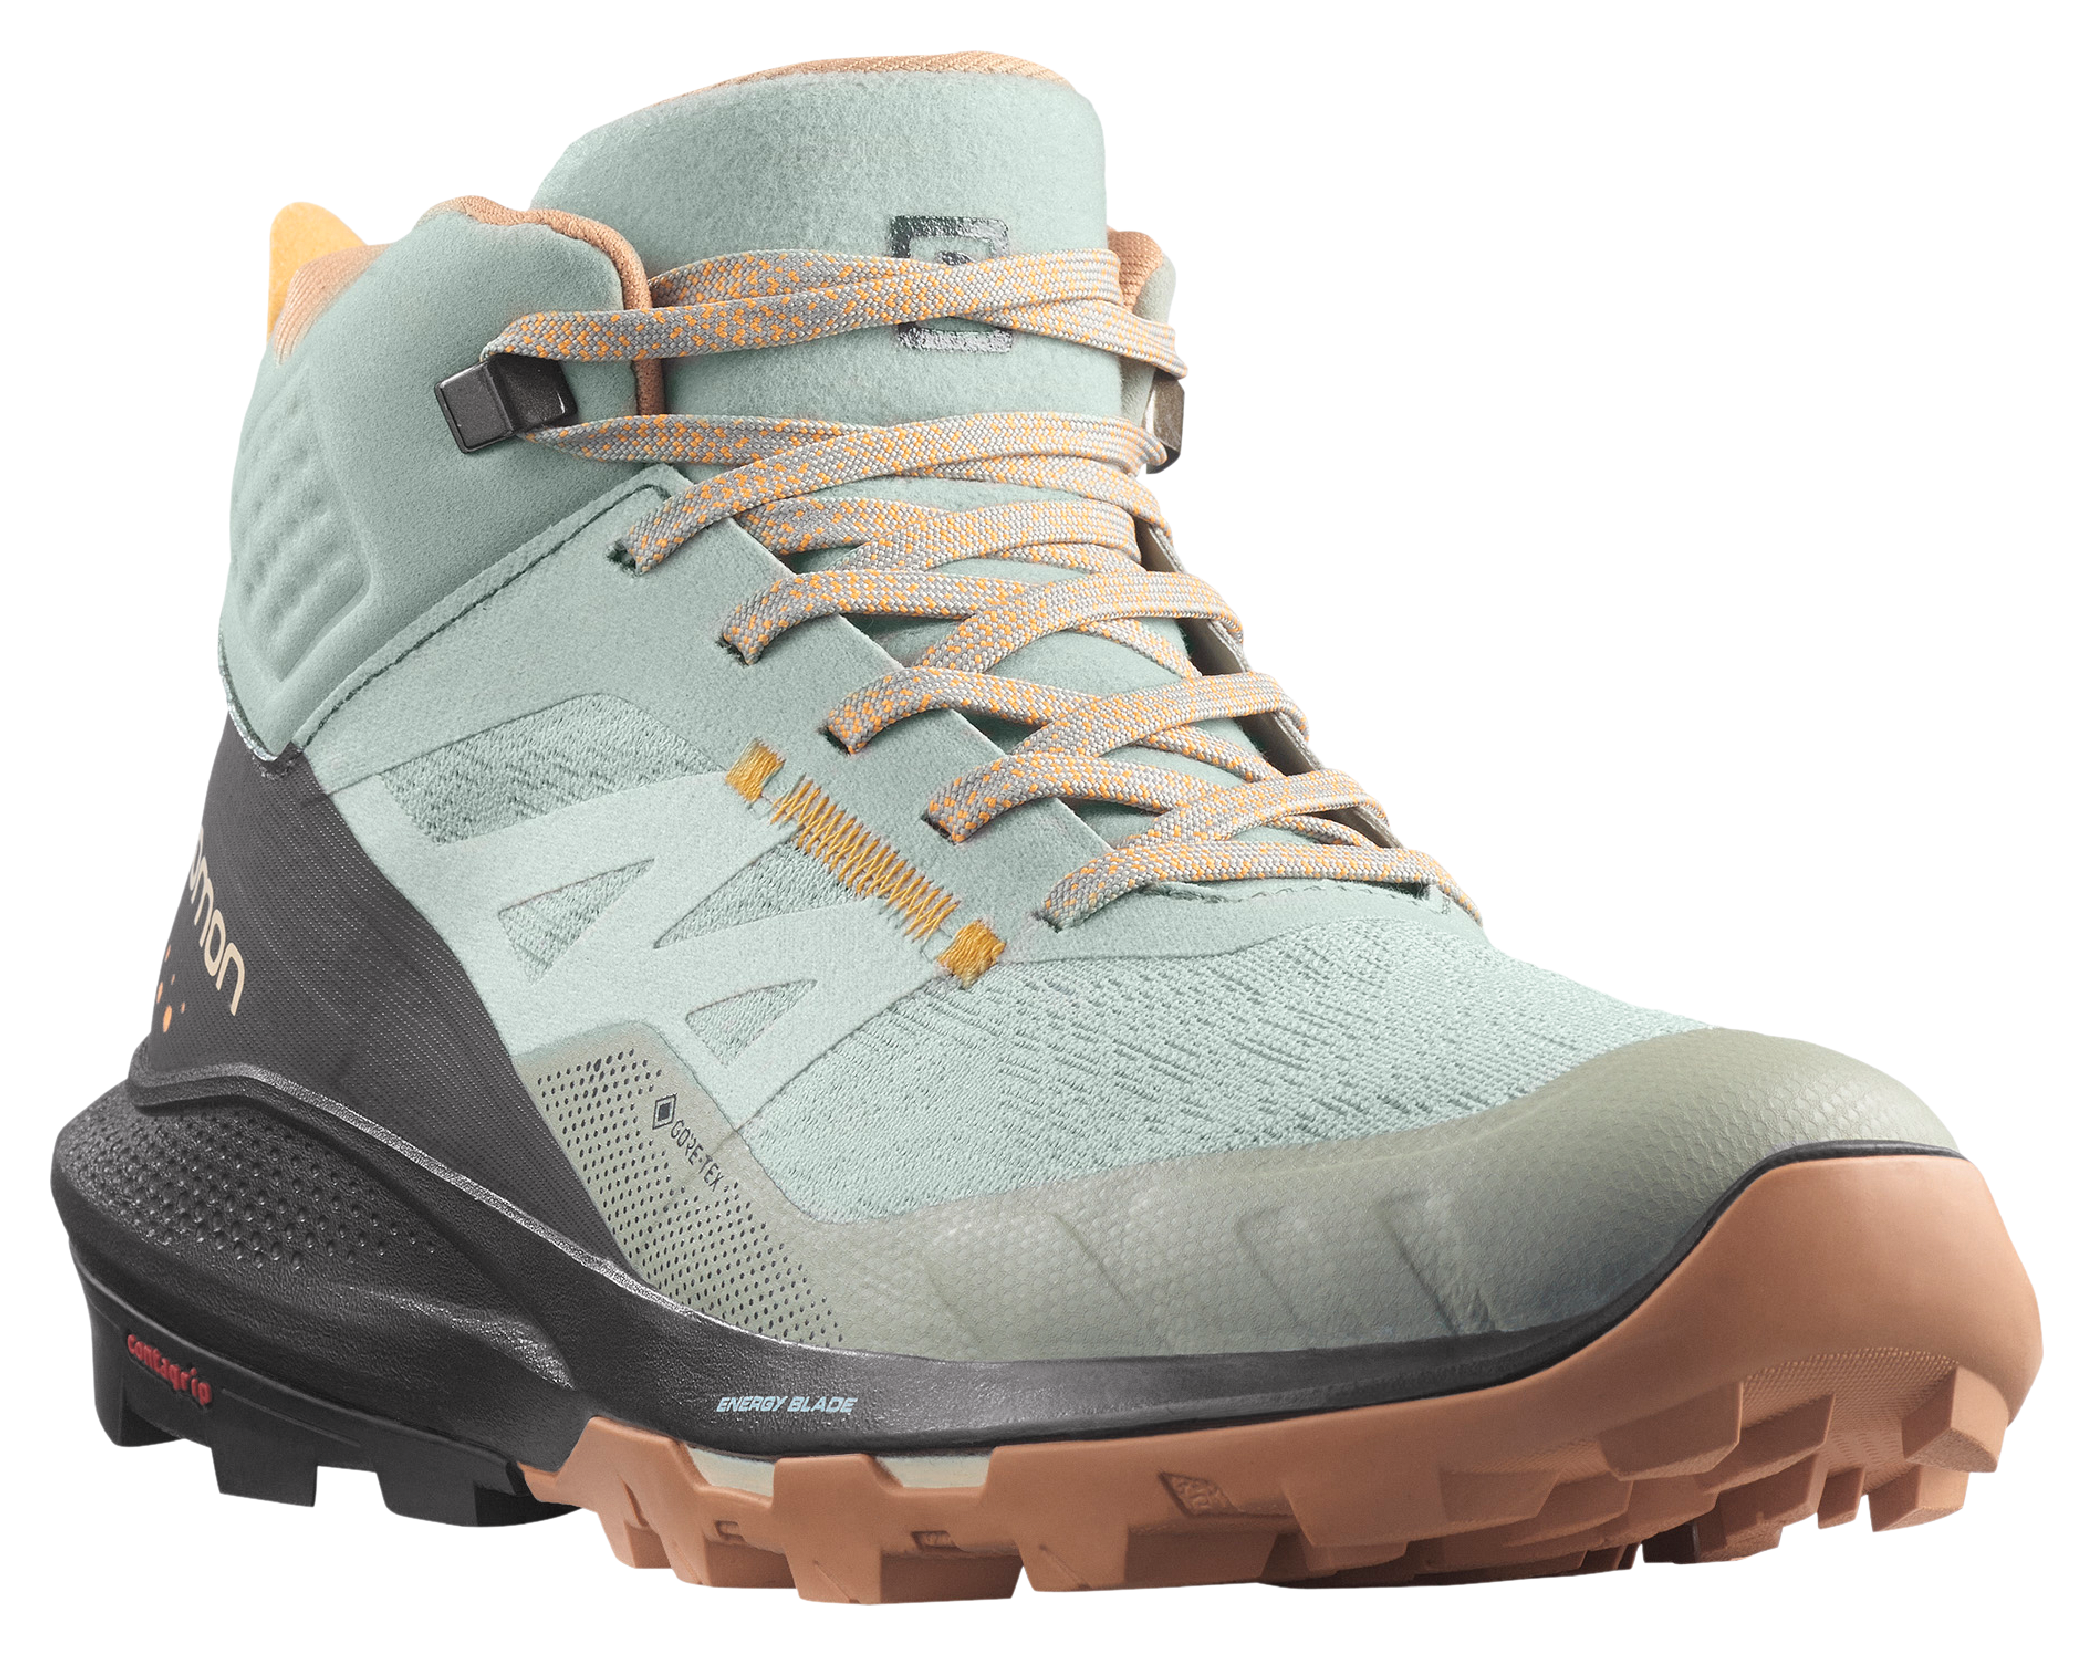 Salomon Outpulse Mid GORE-TEX Hiking Boots for Ladies - Wrought Iron/Ebony/Blaze Orange - 8.5M